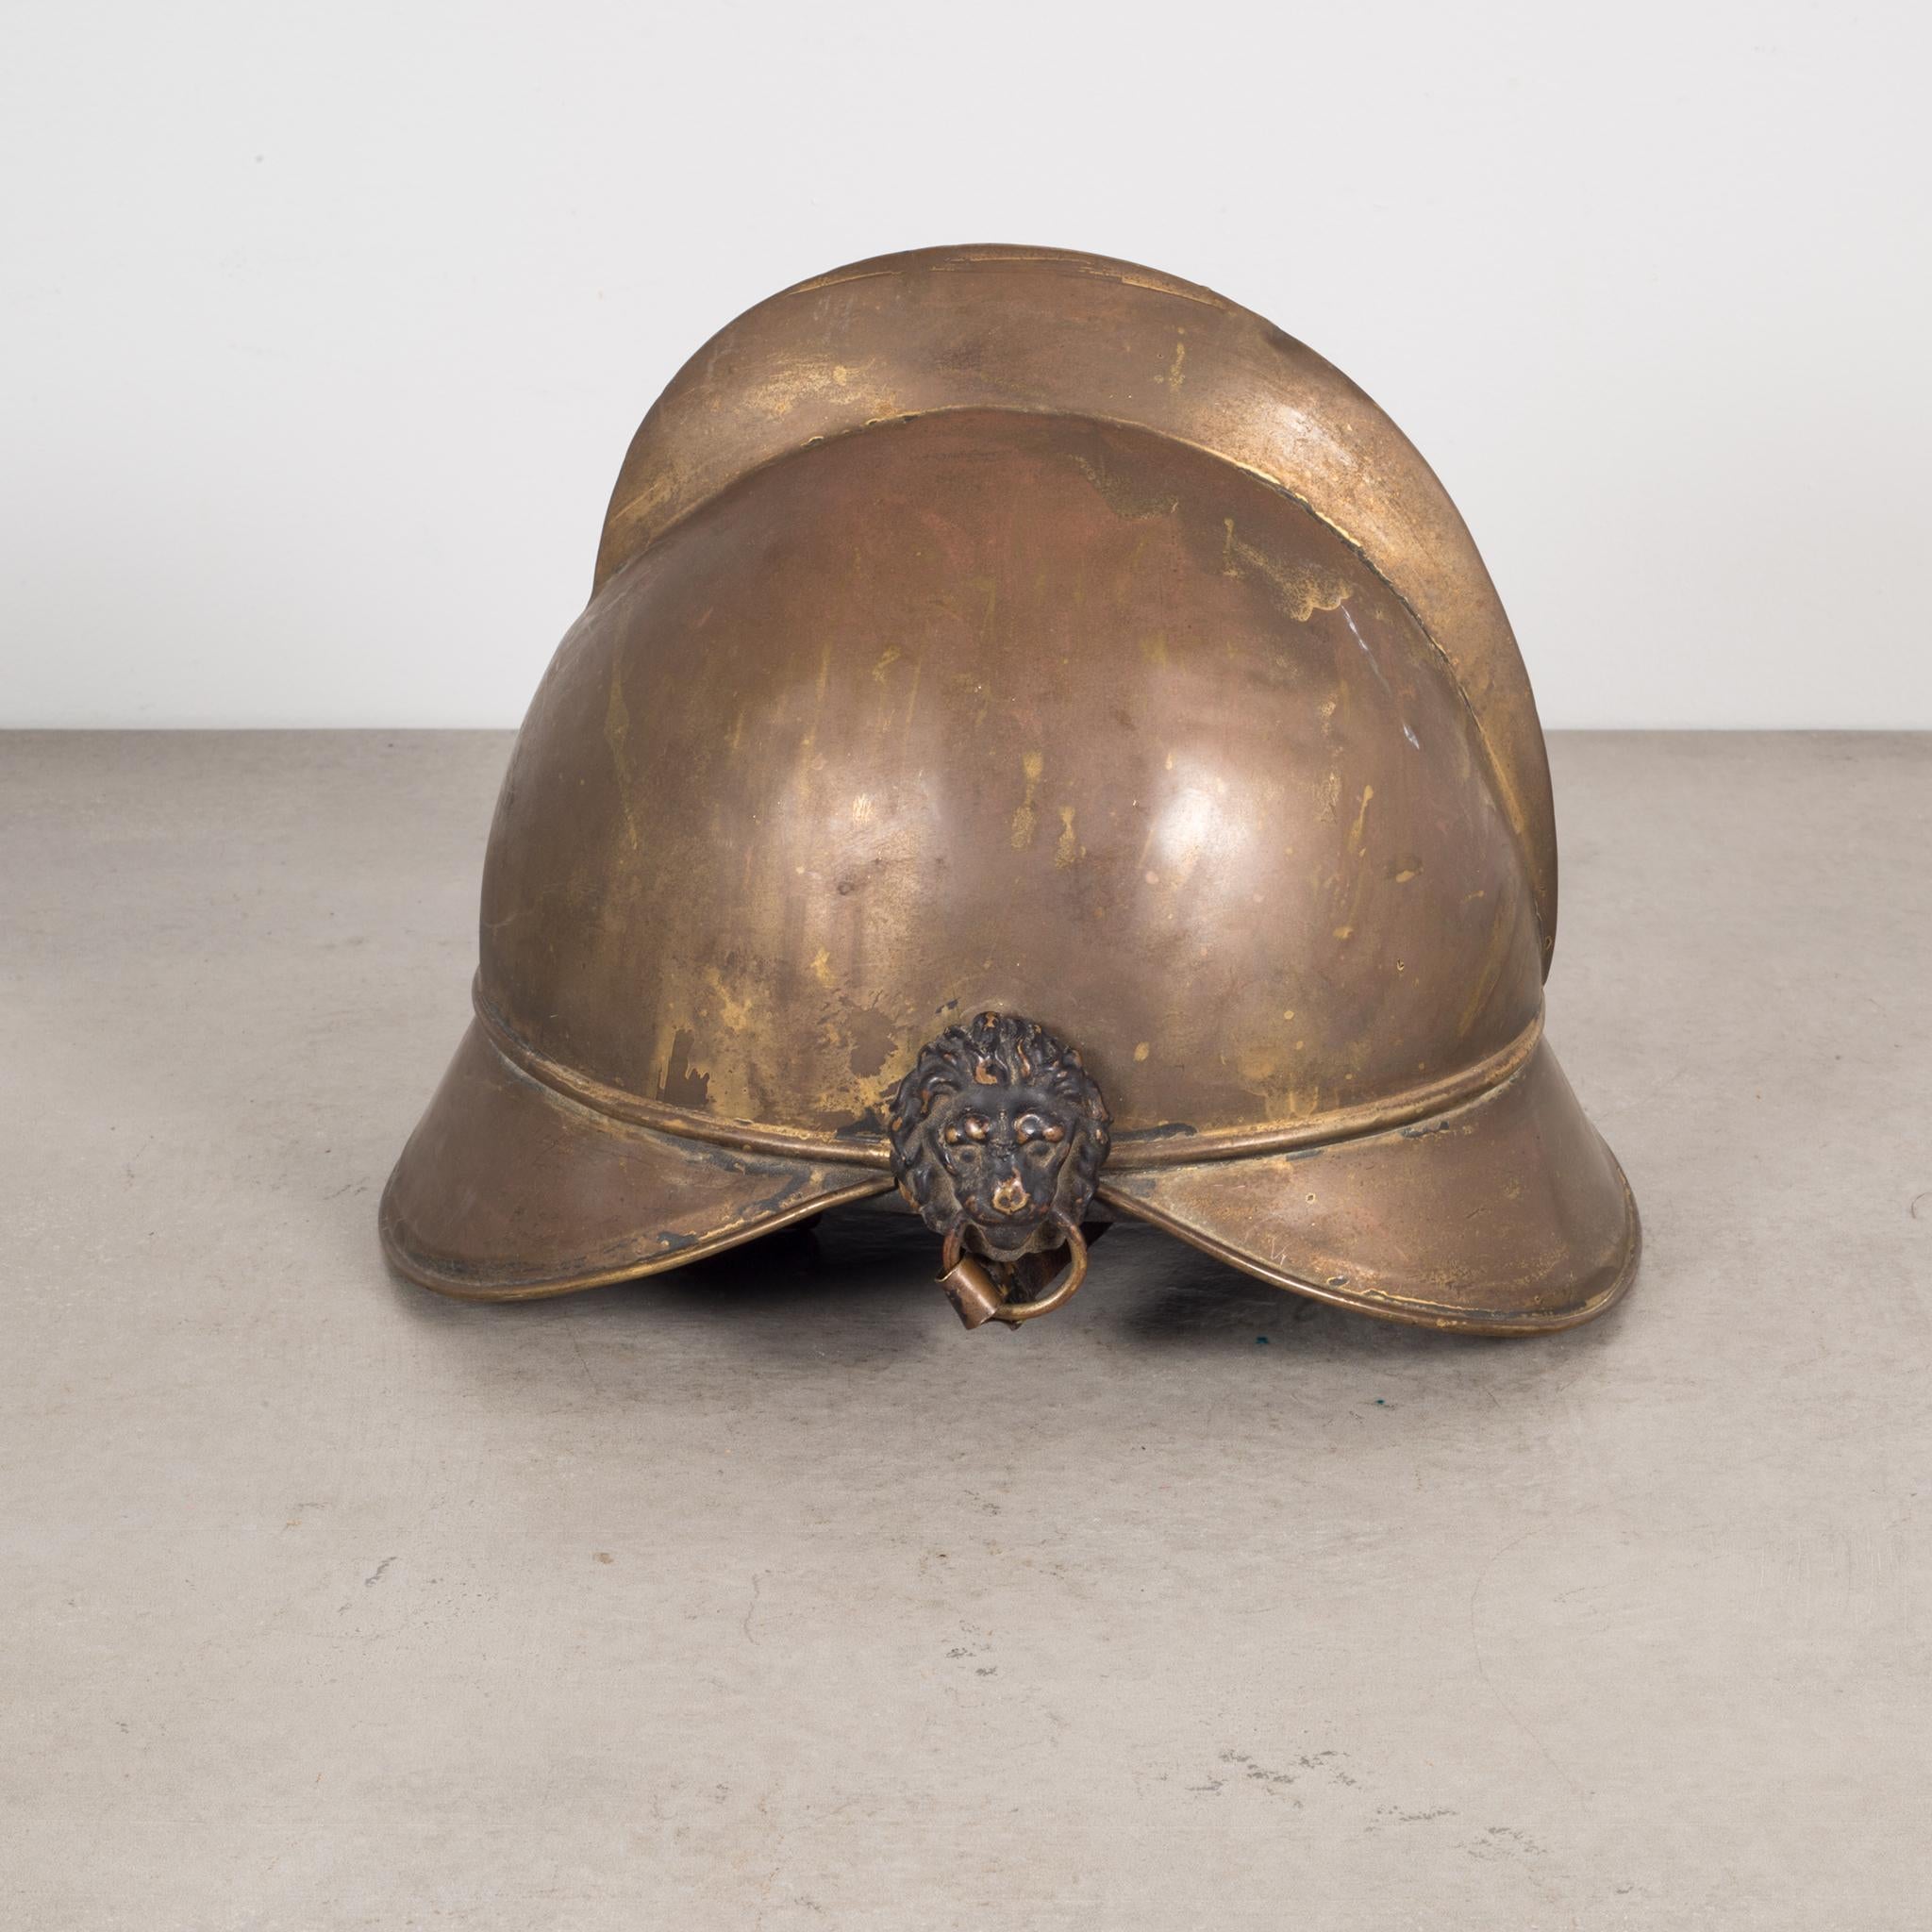 19th century helmet